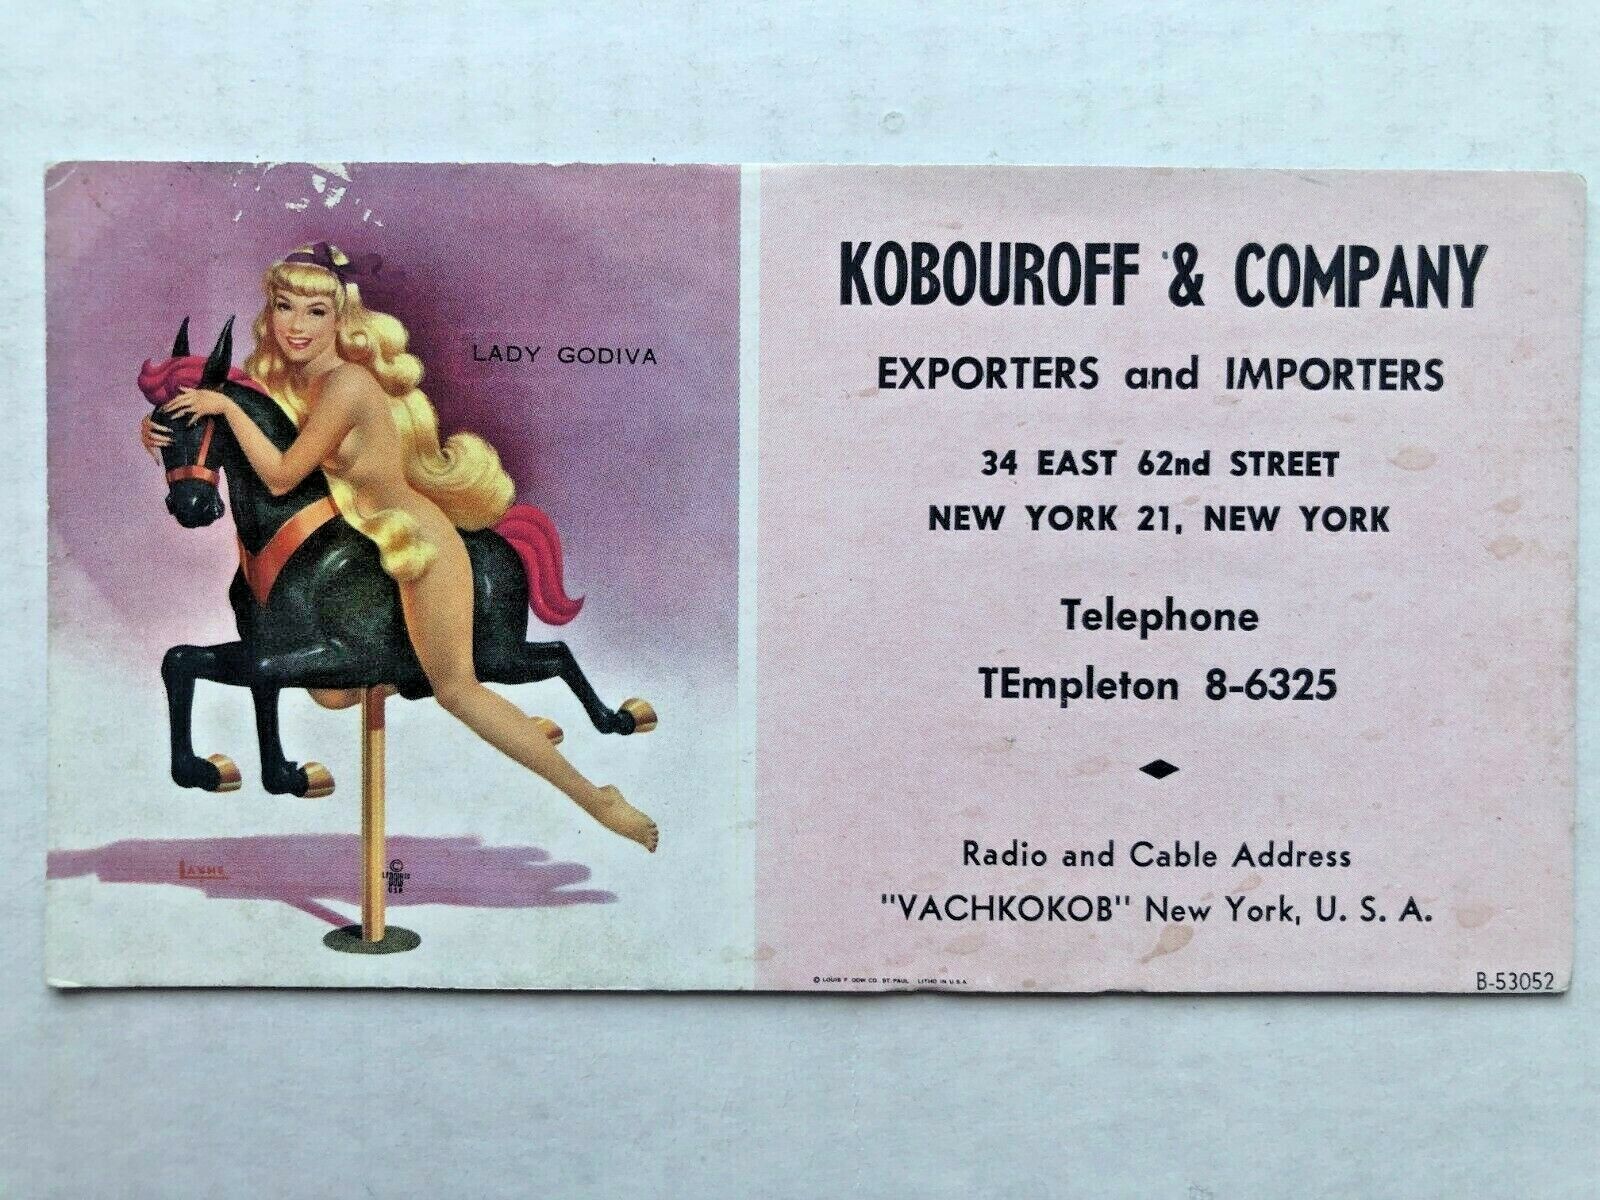 1940's Pinup Girl Advertising Blotter w/ Lady Godiva on Carousel Horse